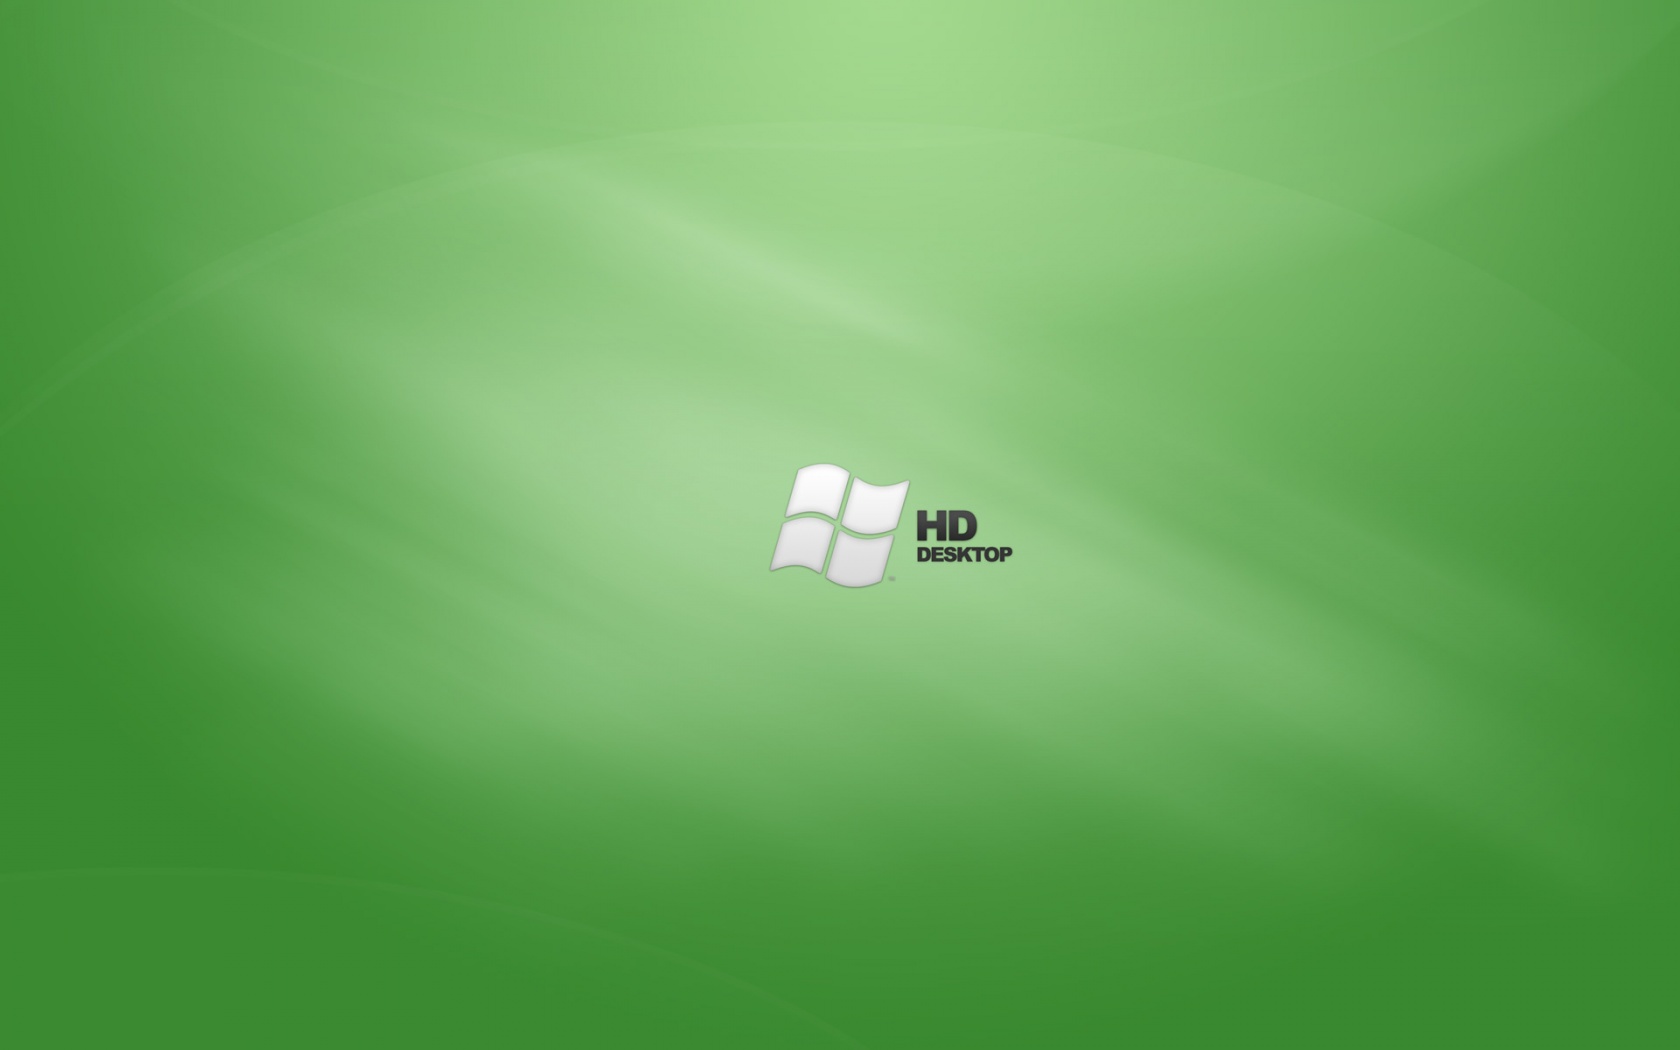 1680x1050 Green HD Desktop desktop PC and Mac wallpaper